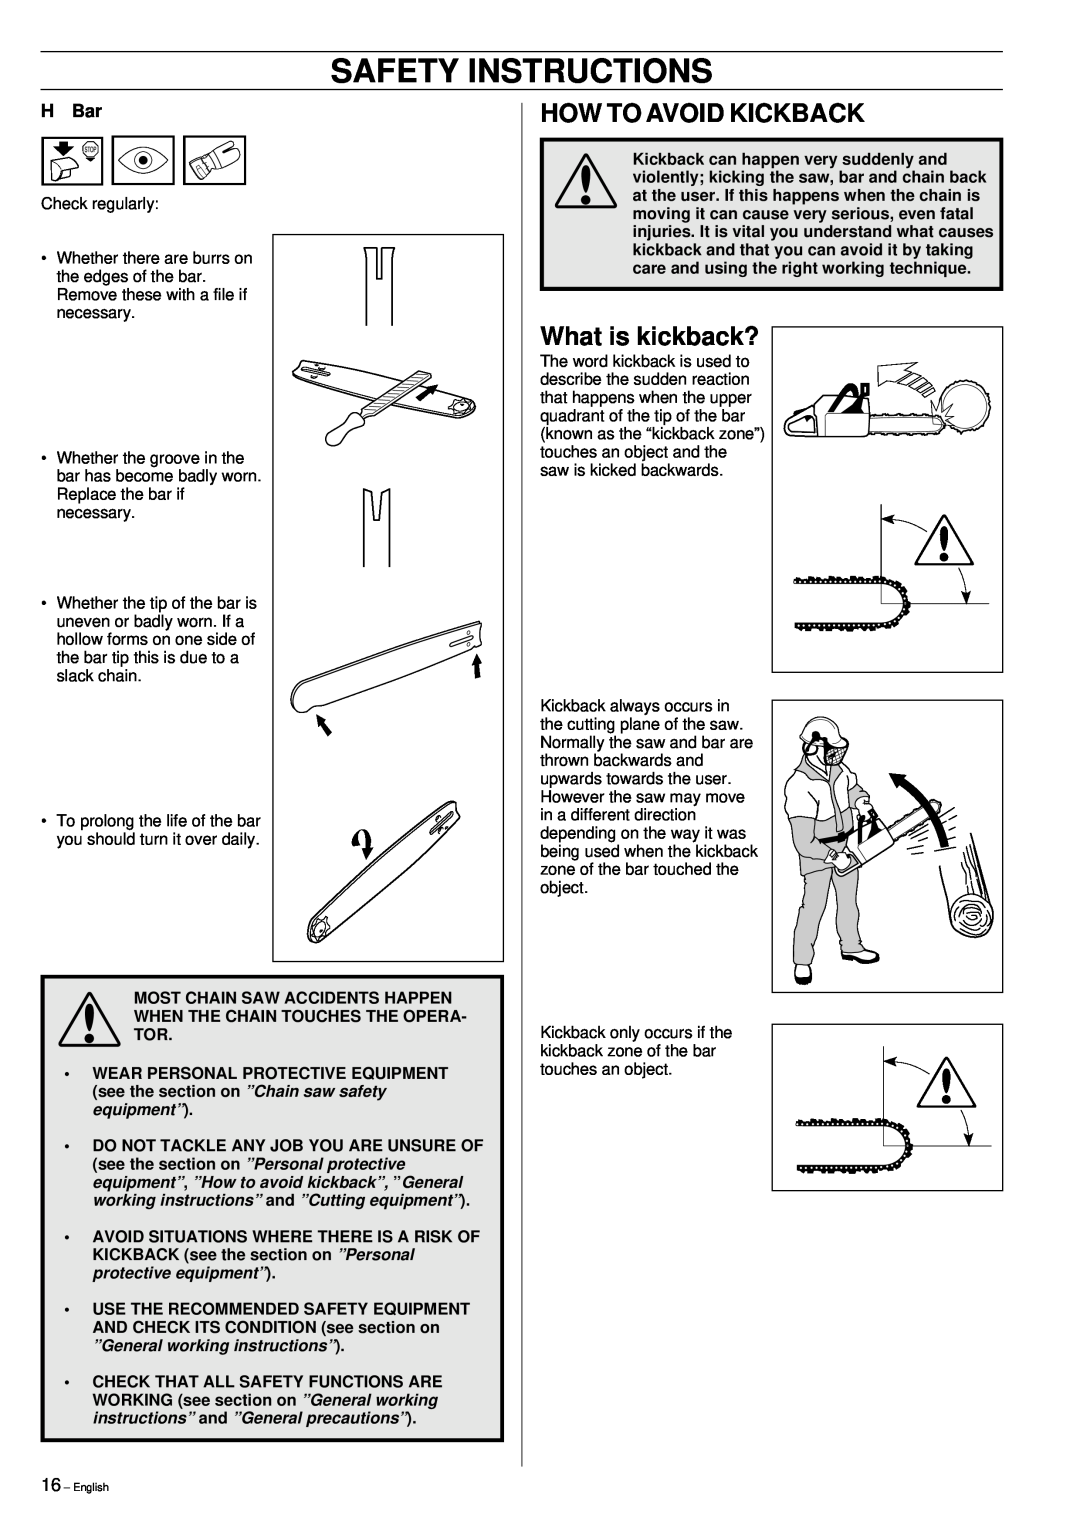 Husqvarna 355 manual How To Avoid Kickback, What is kickback?, H Bar, Safety Instructions 